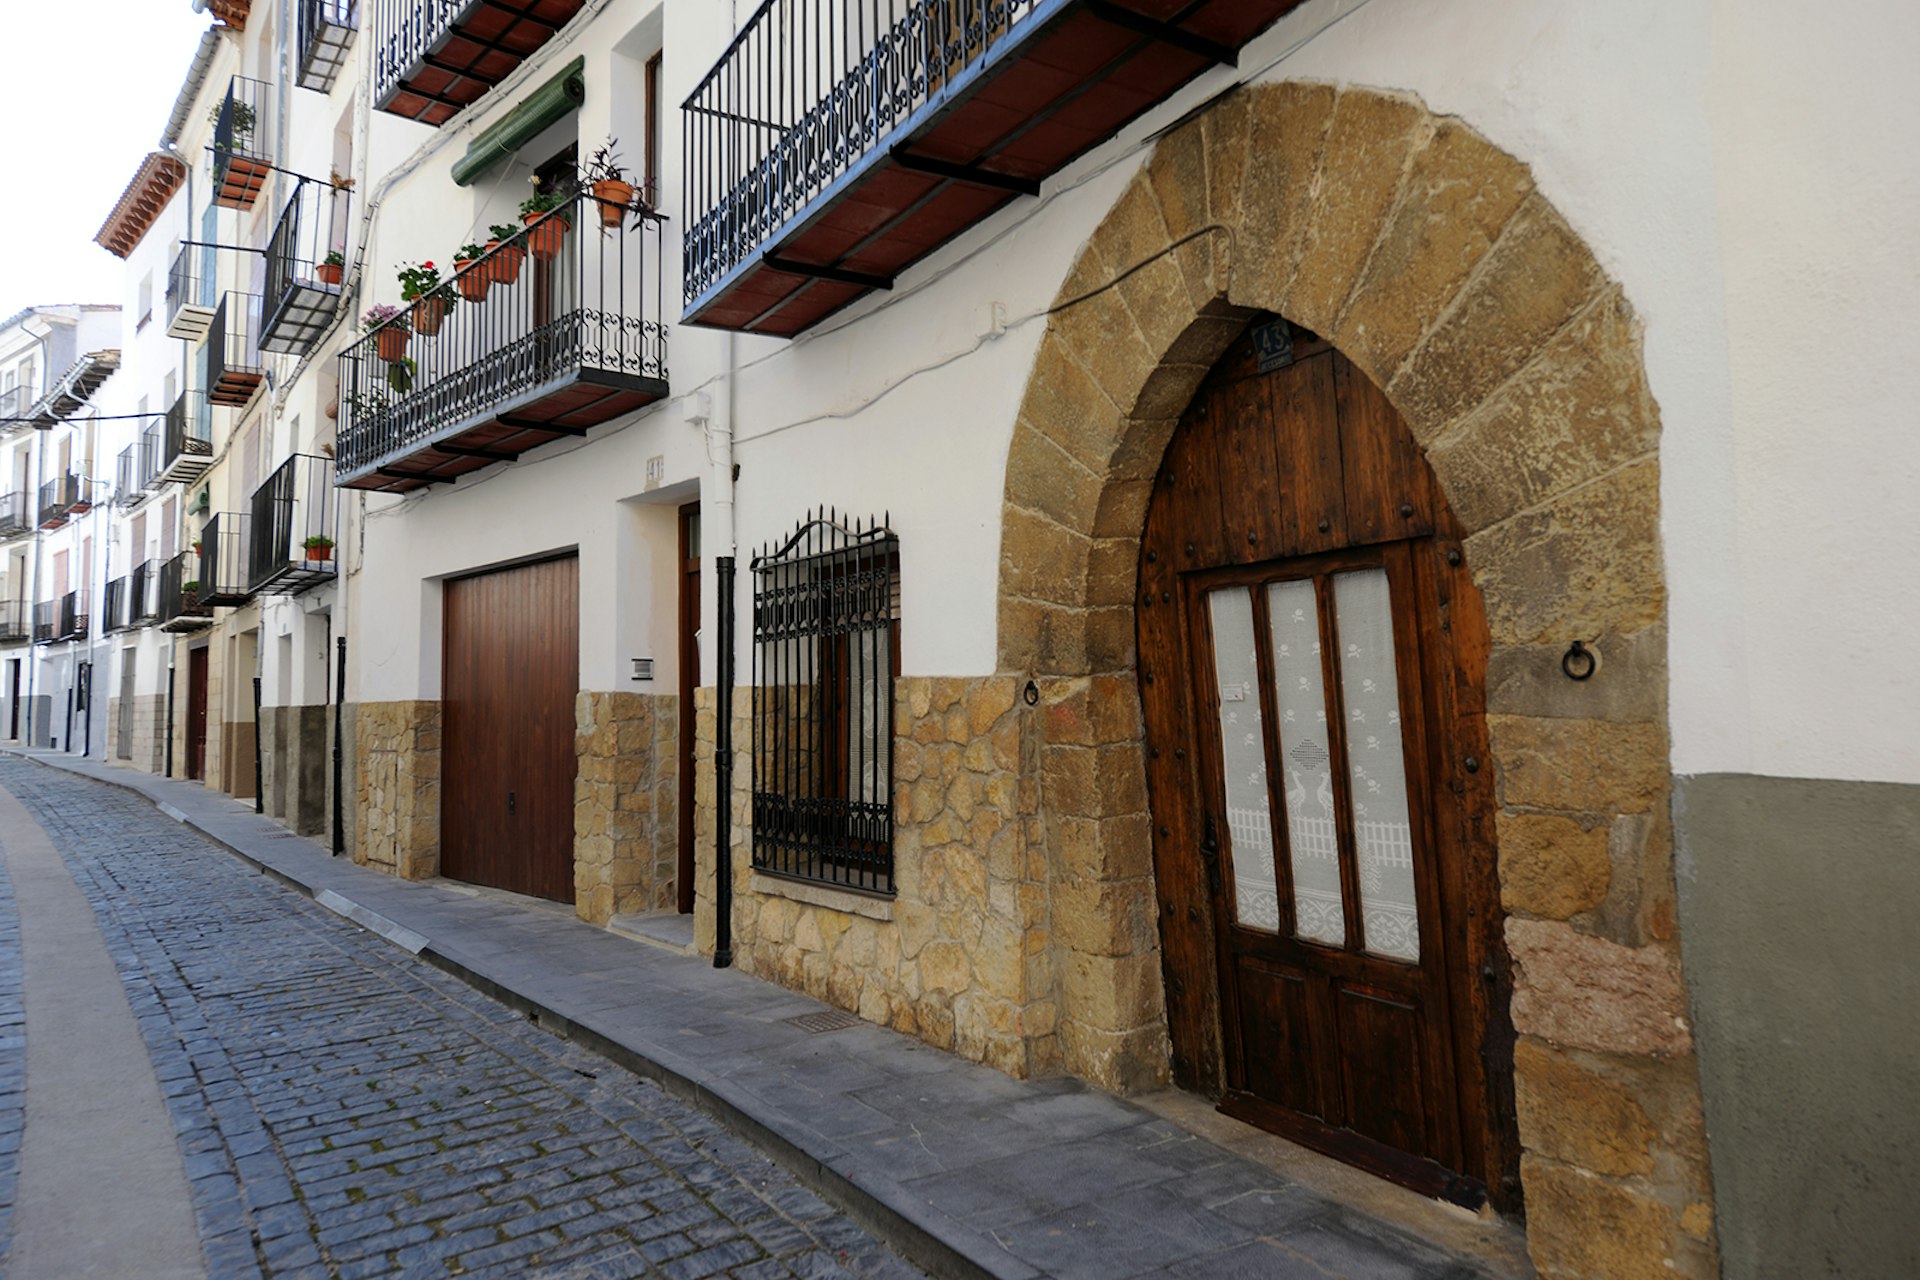 Features - Street scene, Morella, Castellon, Spain